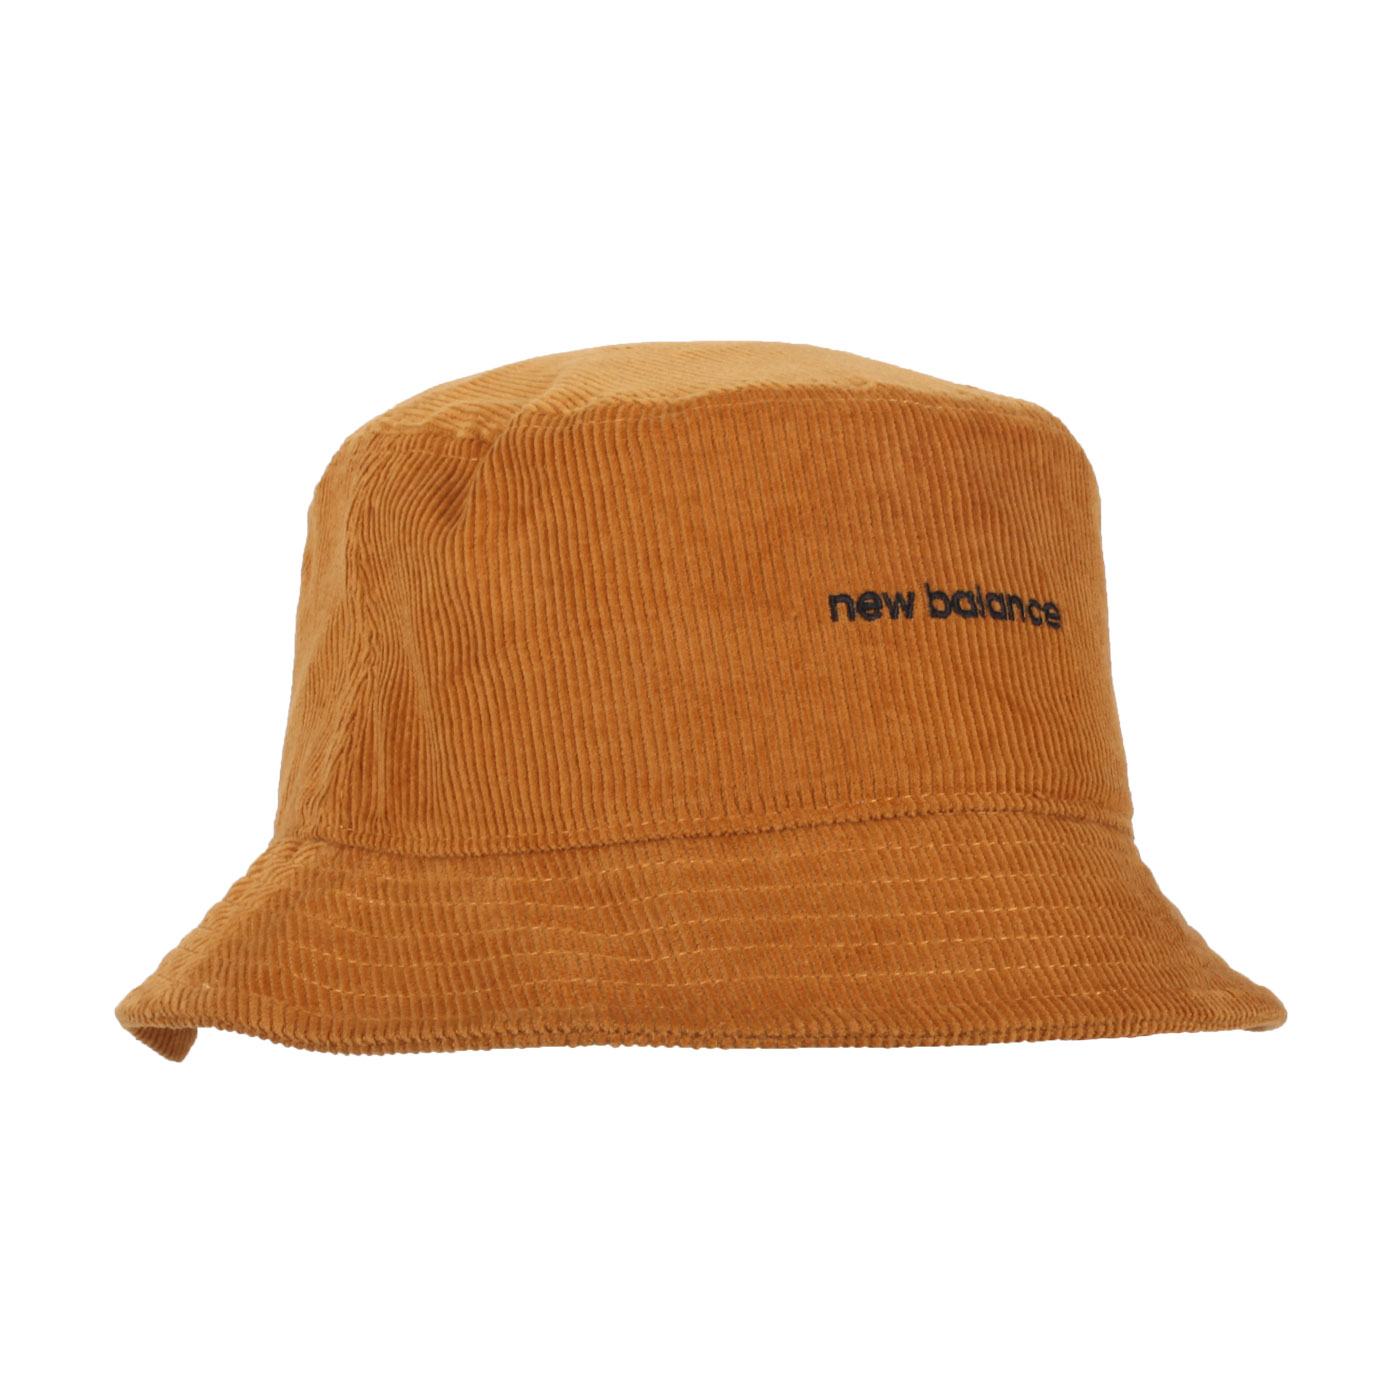 NEW BALANCE 羅紋漁夫帽 LAH23110WWK - 棕褐黑